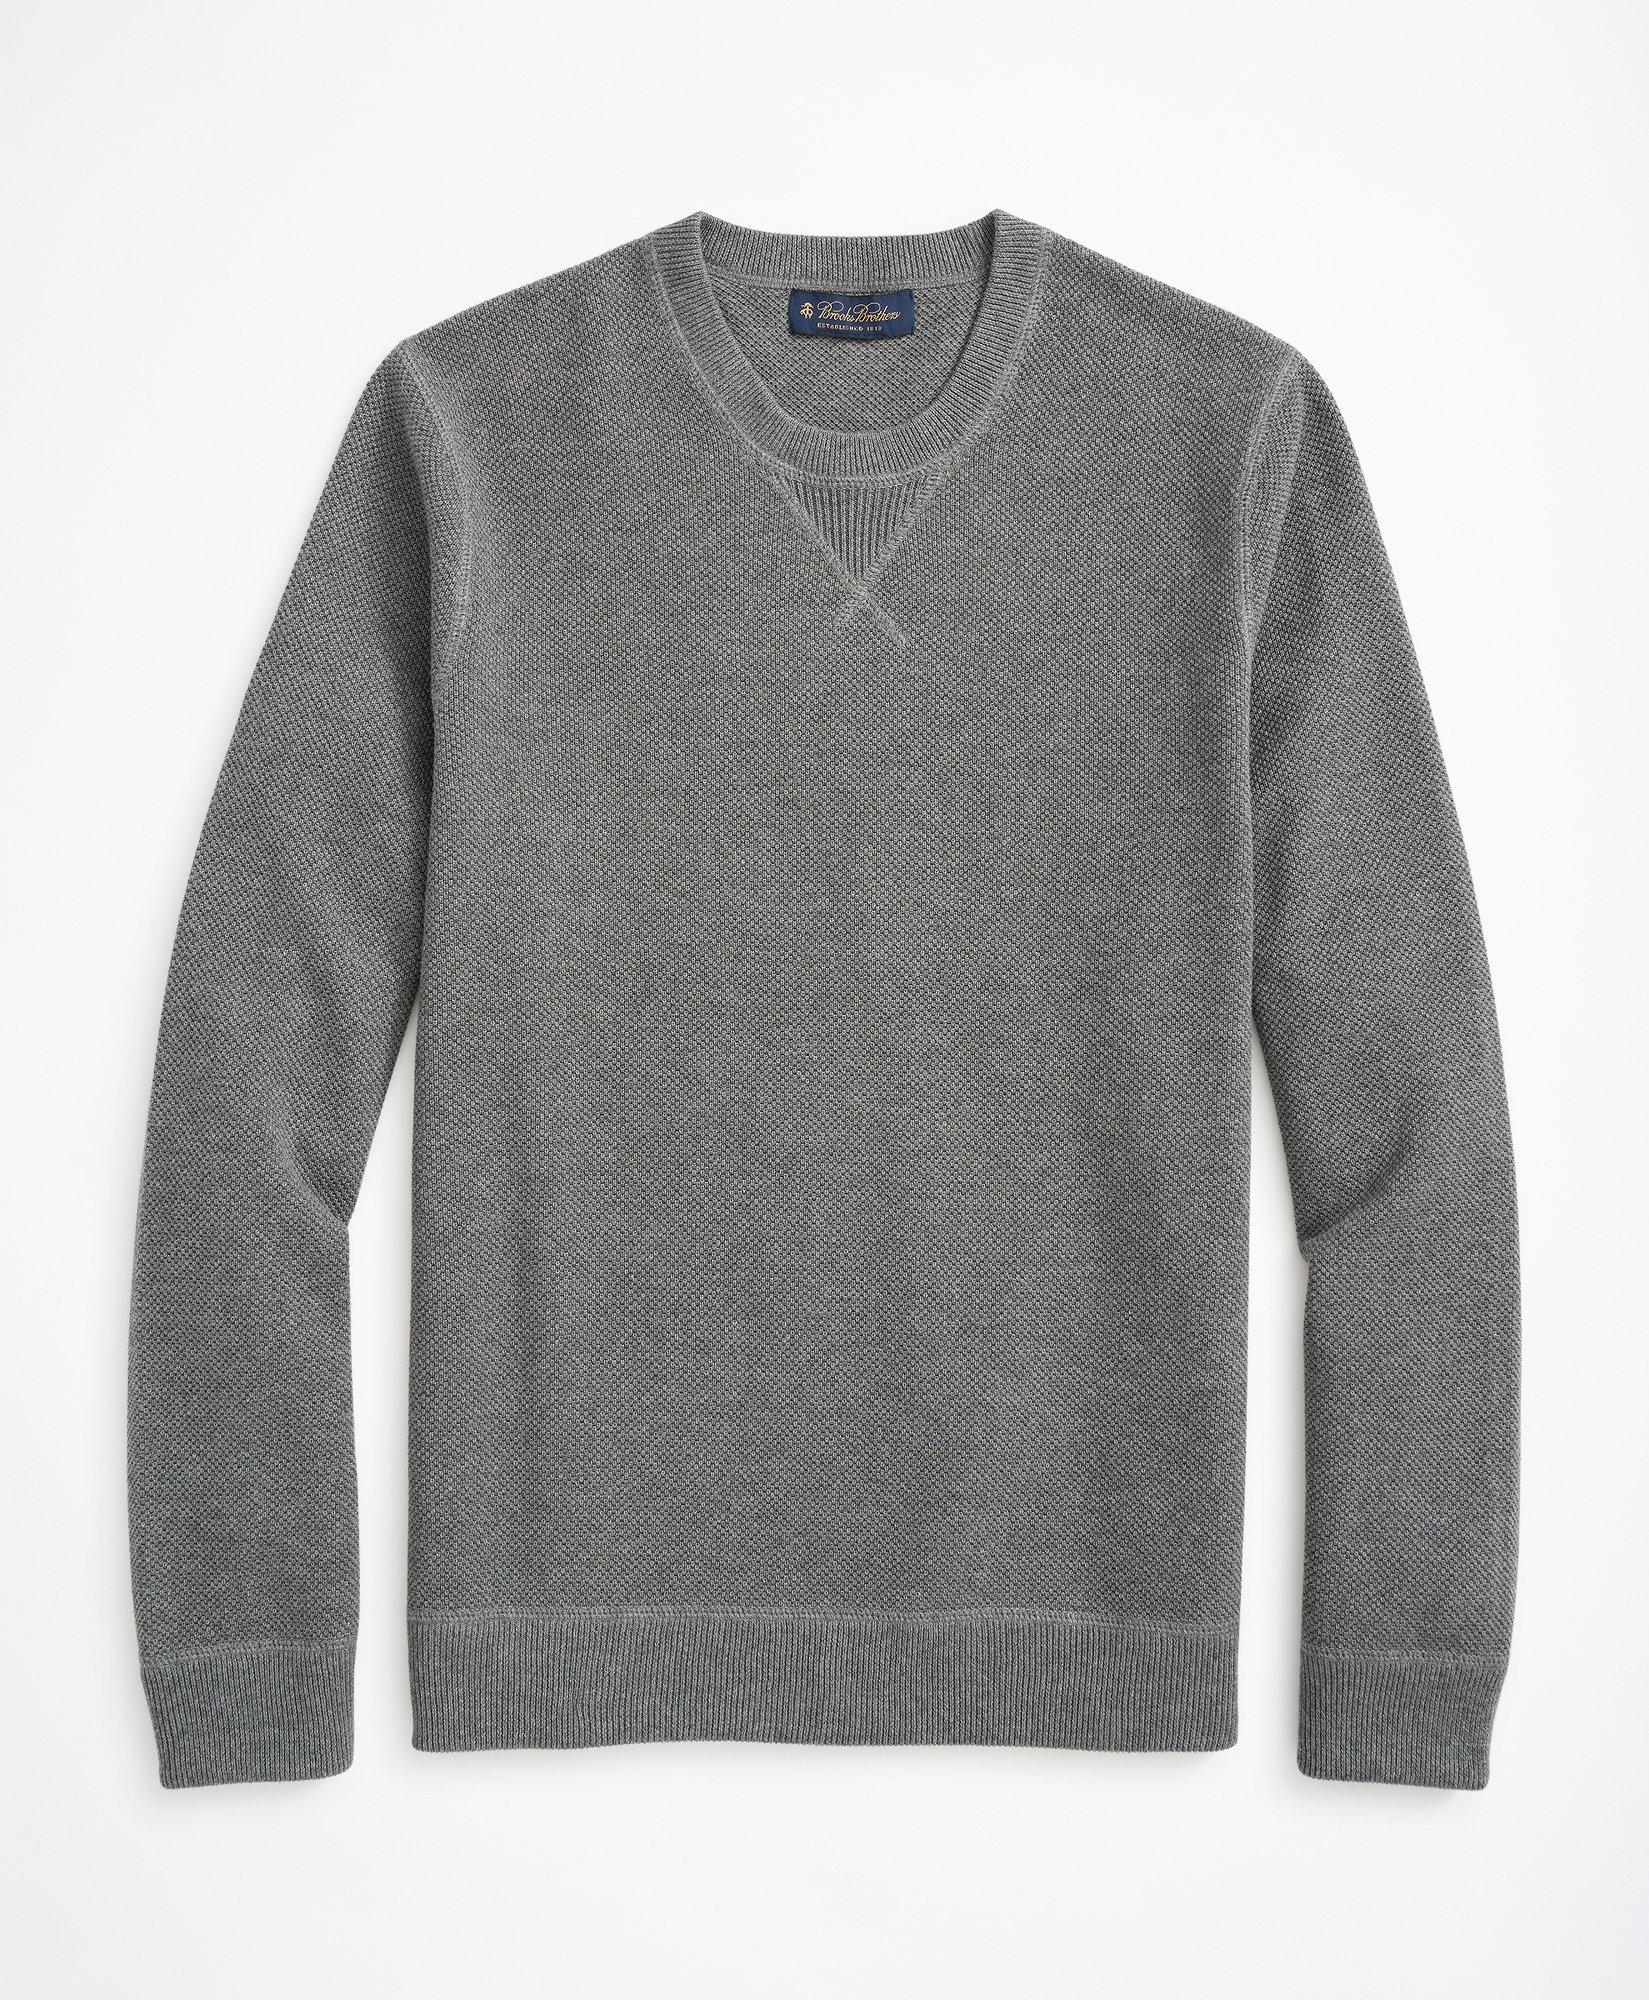 Cotton Pique Sweater Crewneck